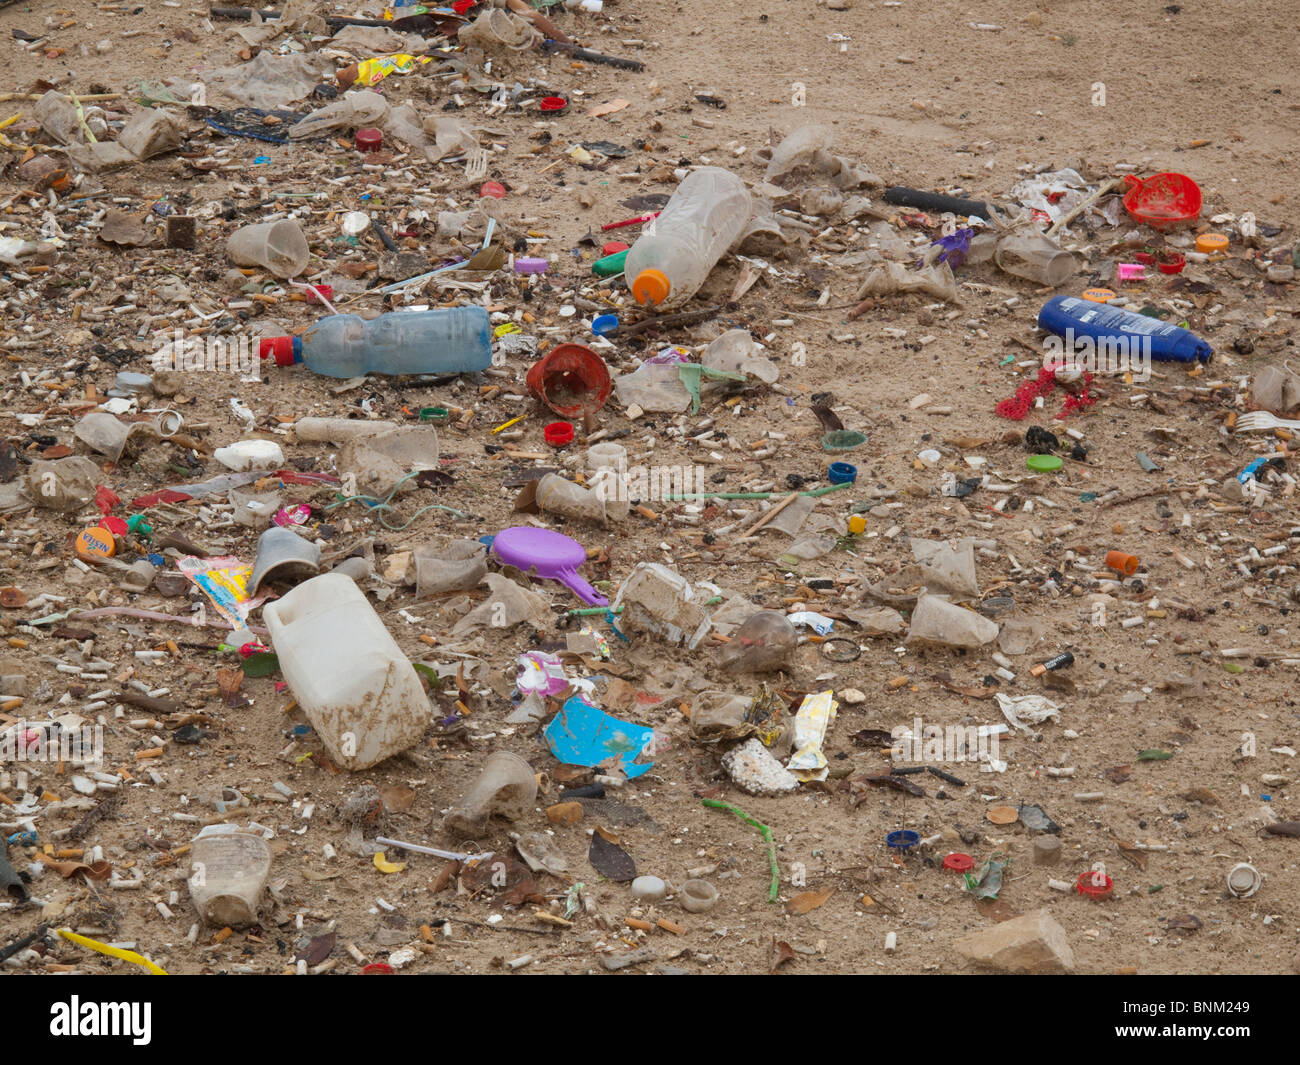 https://c8.alamy.com/comp/BNM249/beach-pollution-by-plastic-and-trash-BNM249.jpg